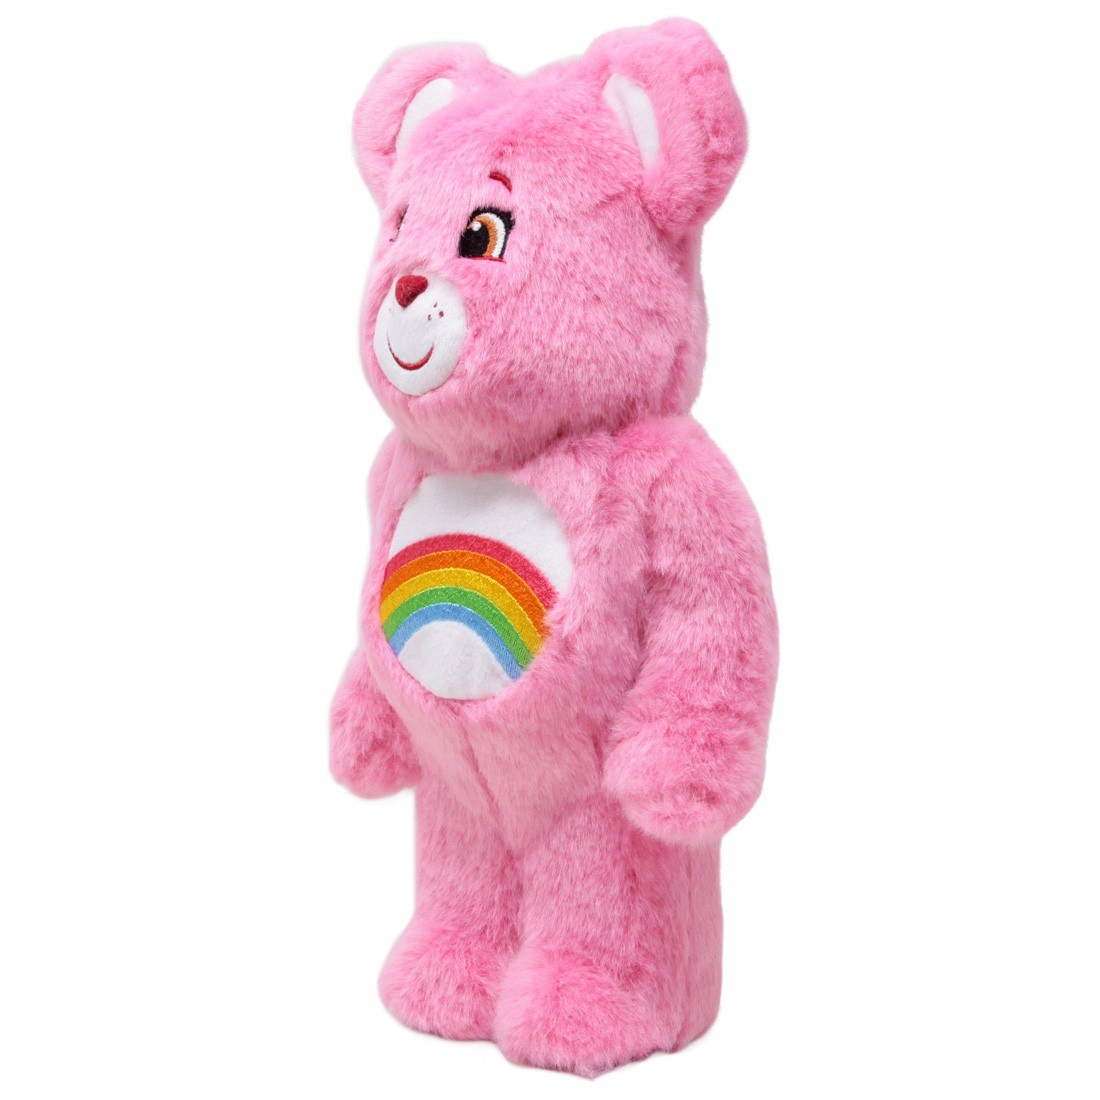 Medicom Care Bears Cheer Bear Costume Ver. 400% Bearbrick Figure pink